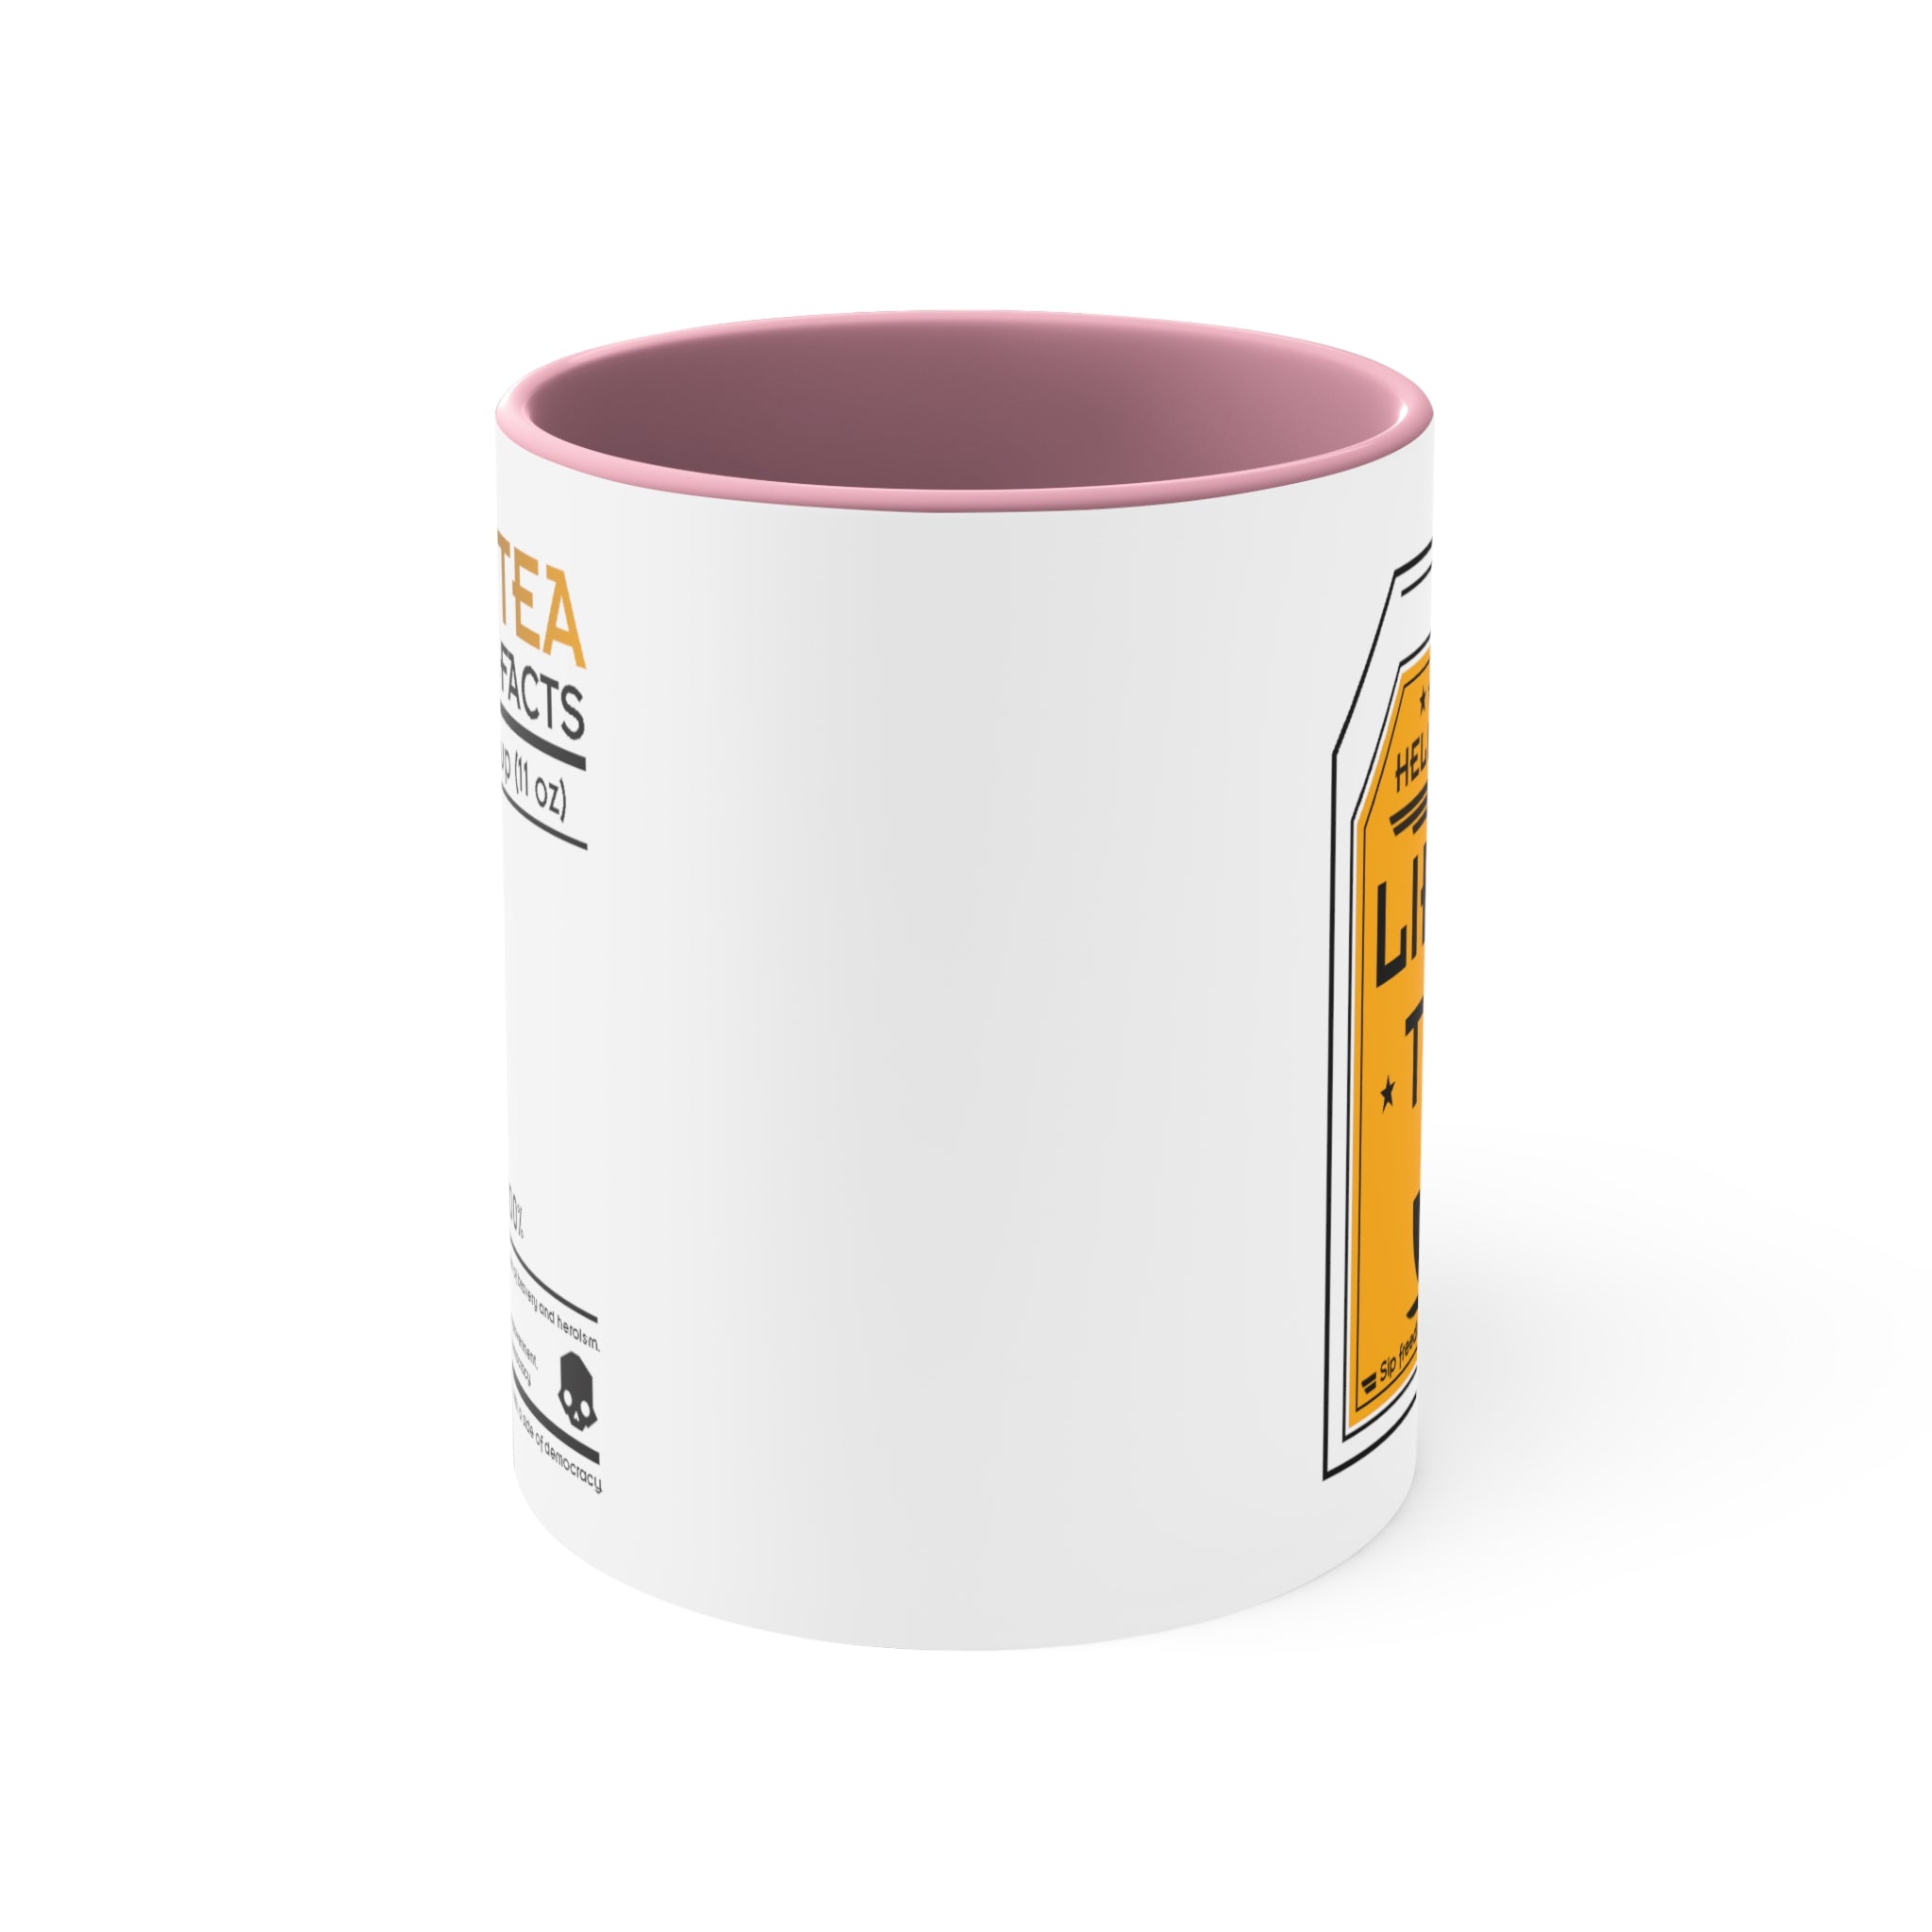 Helldivers Liber-Tea Accent Coffee Mug, 11oz